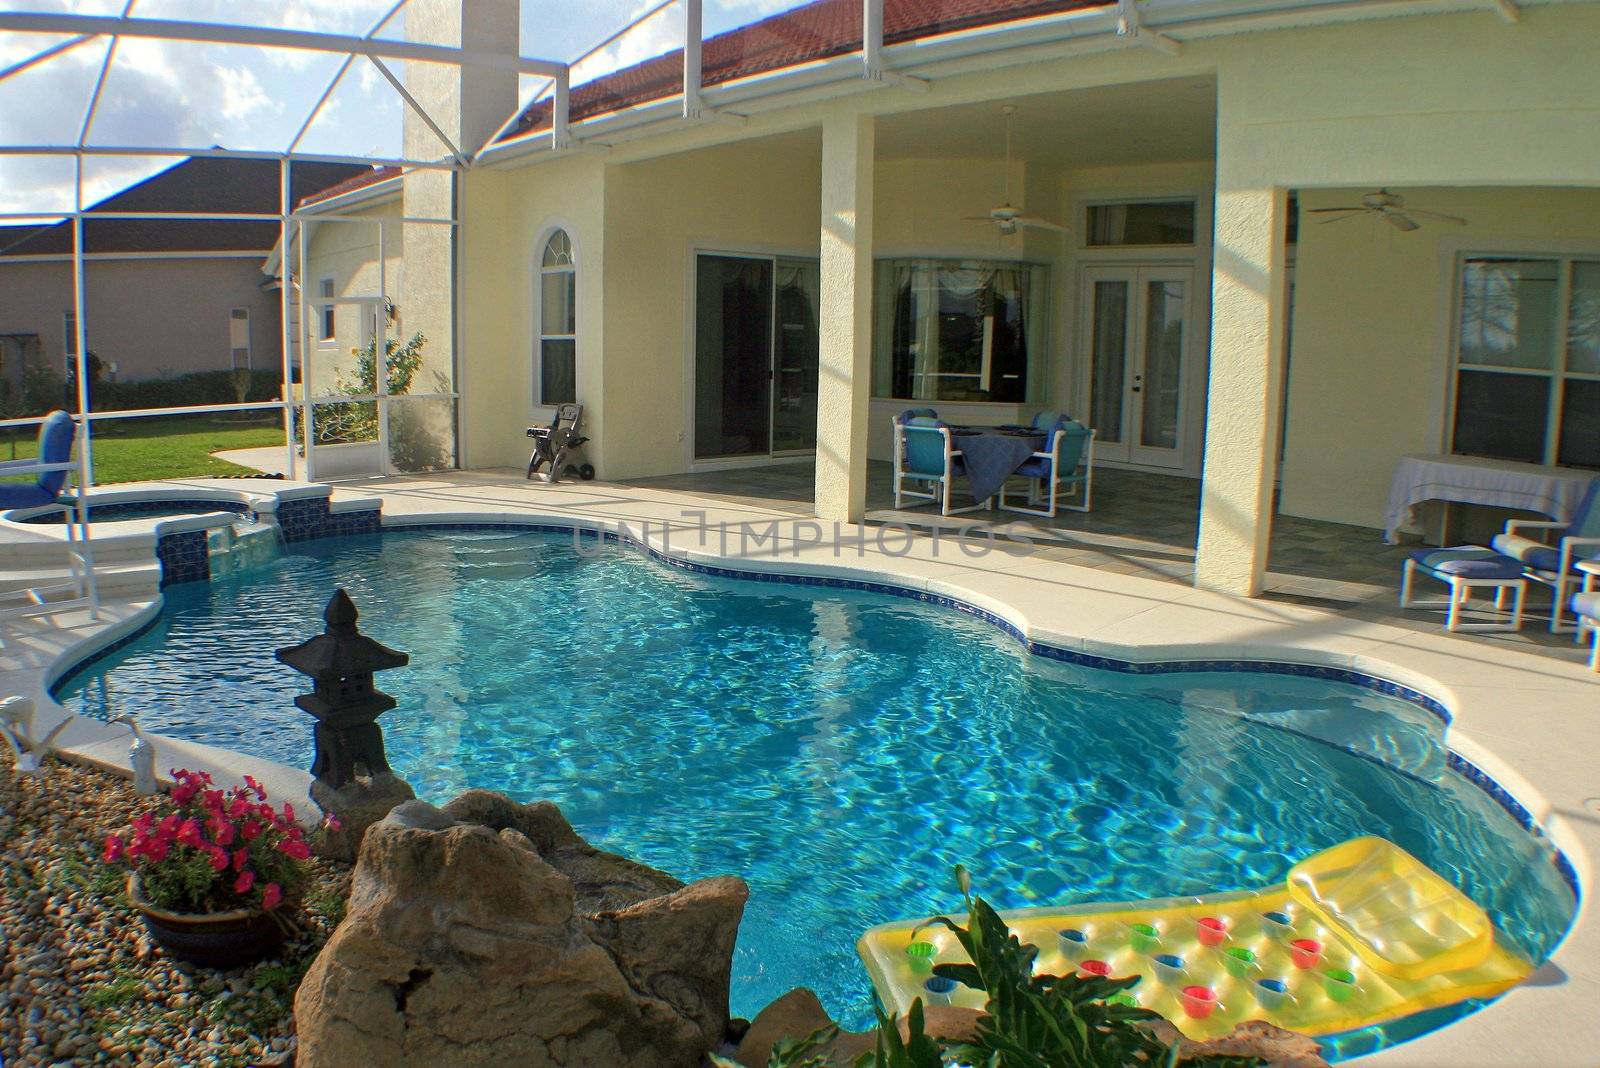 A swimming pool, spa and lanai in Florida.